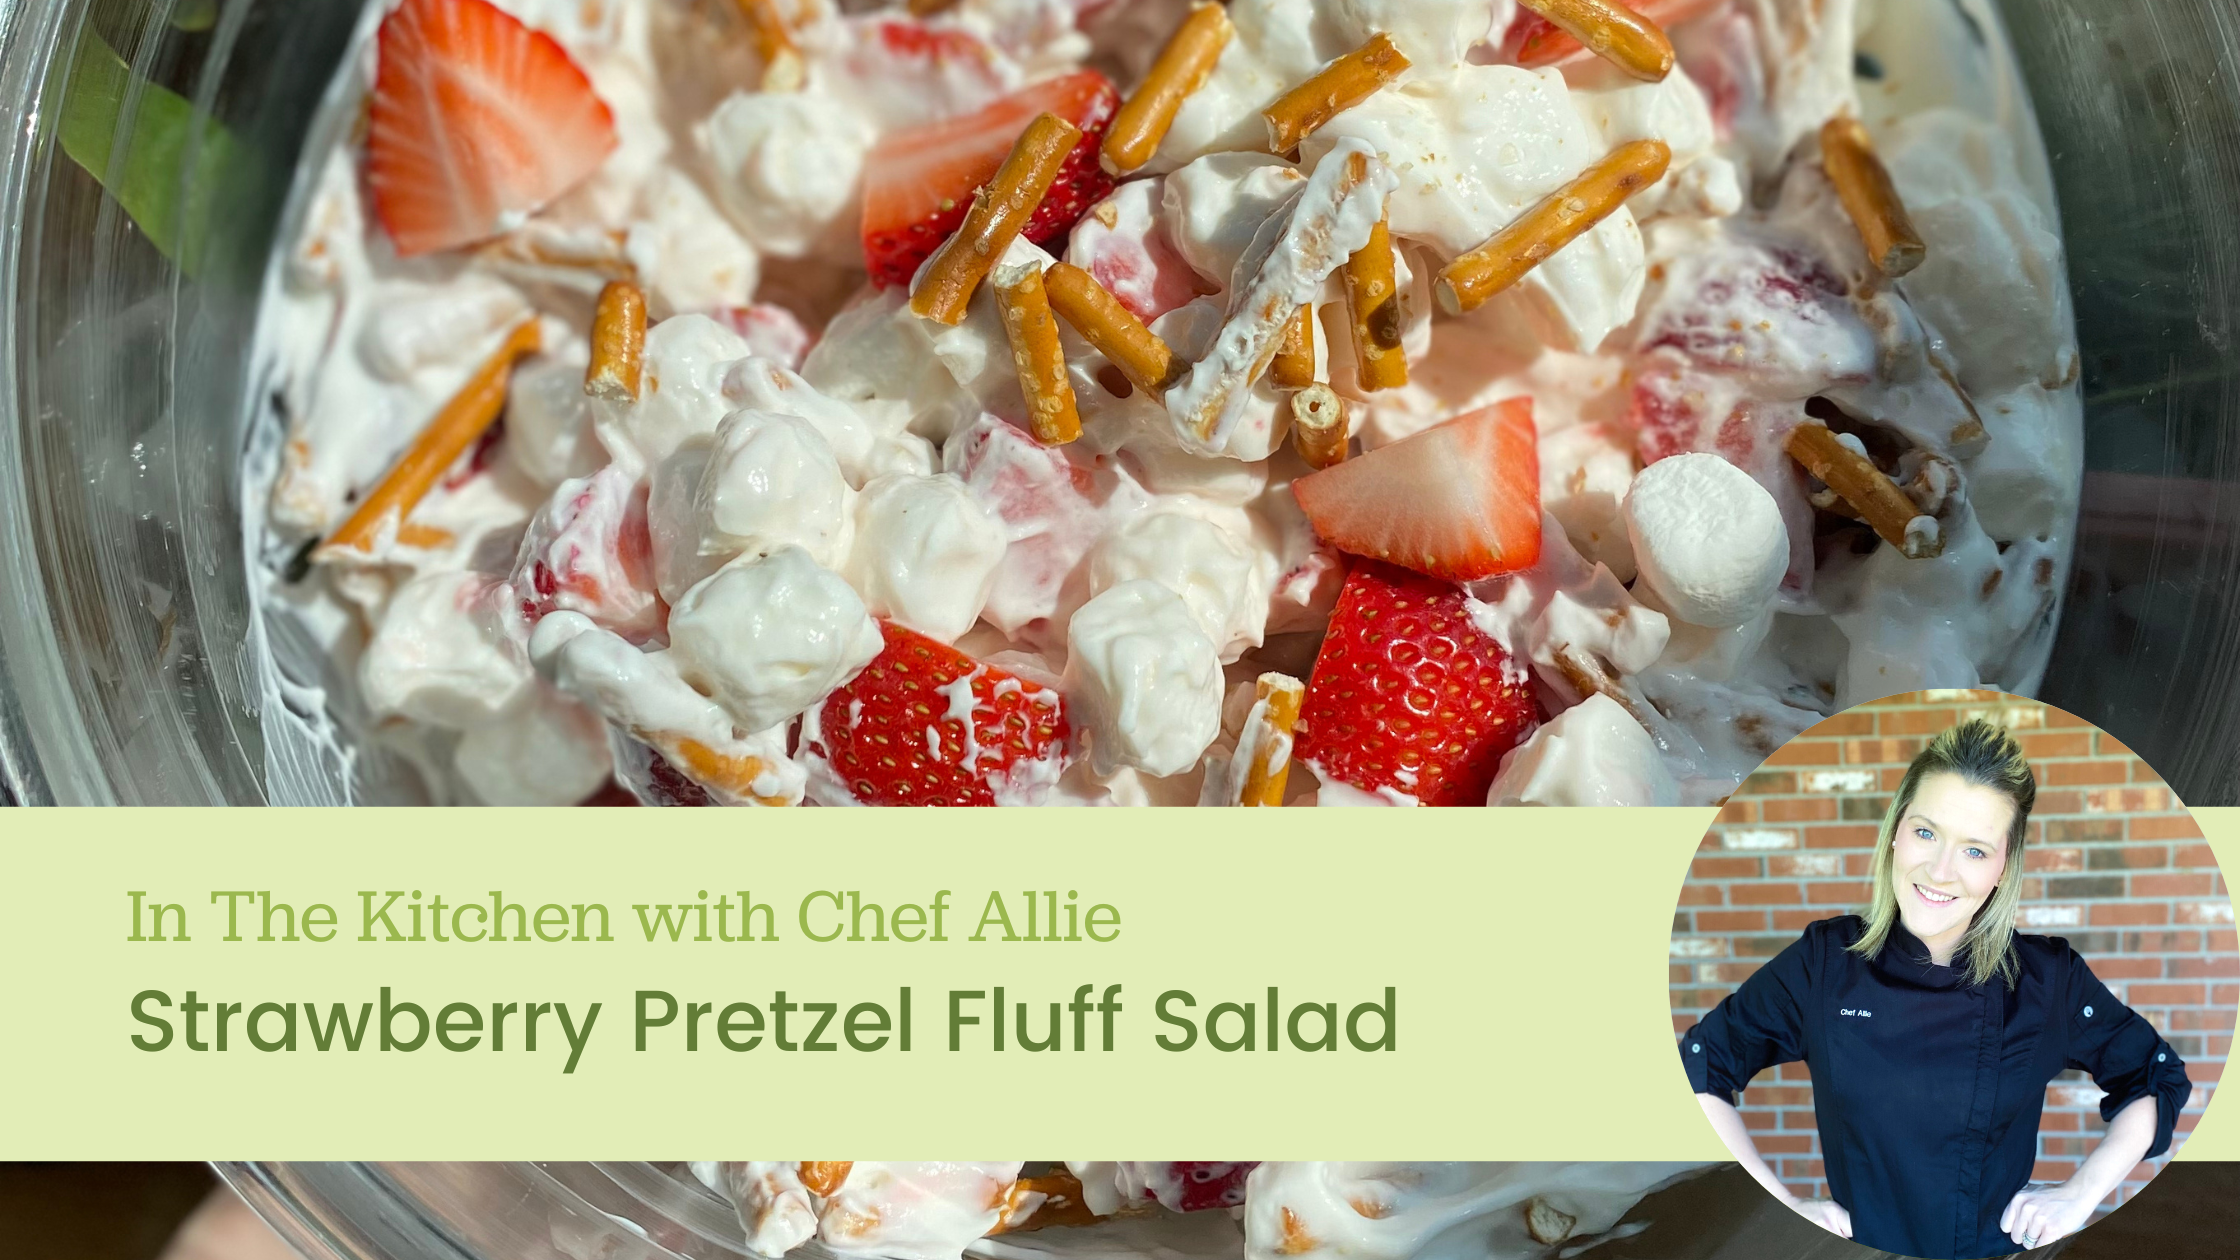 Strawberry pretzel fluff salad